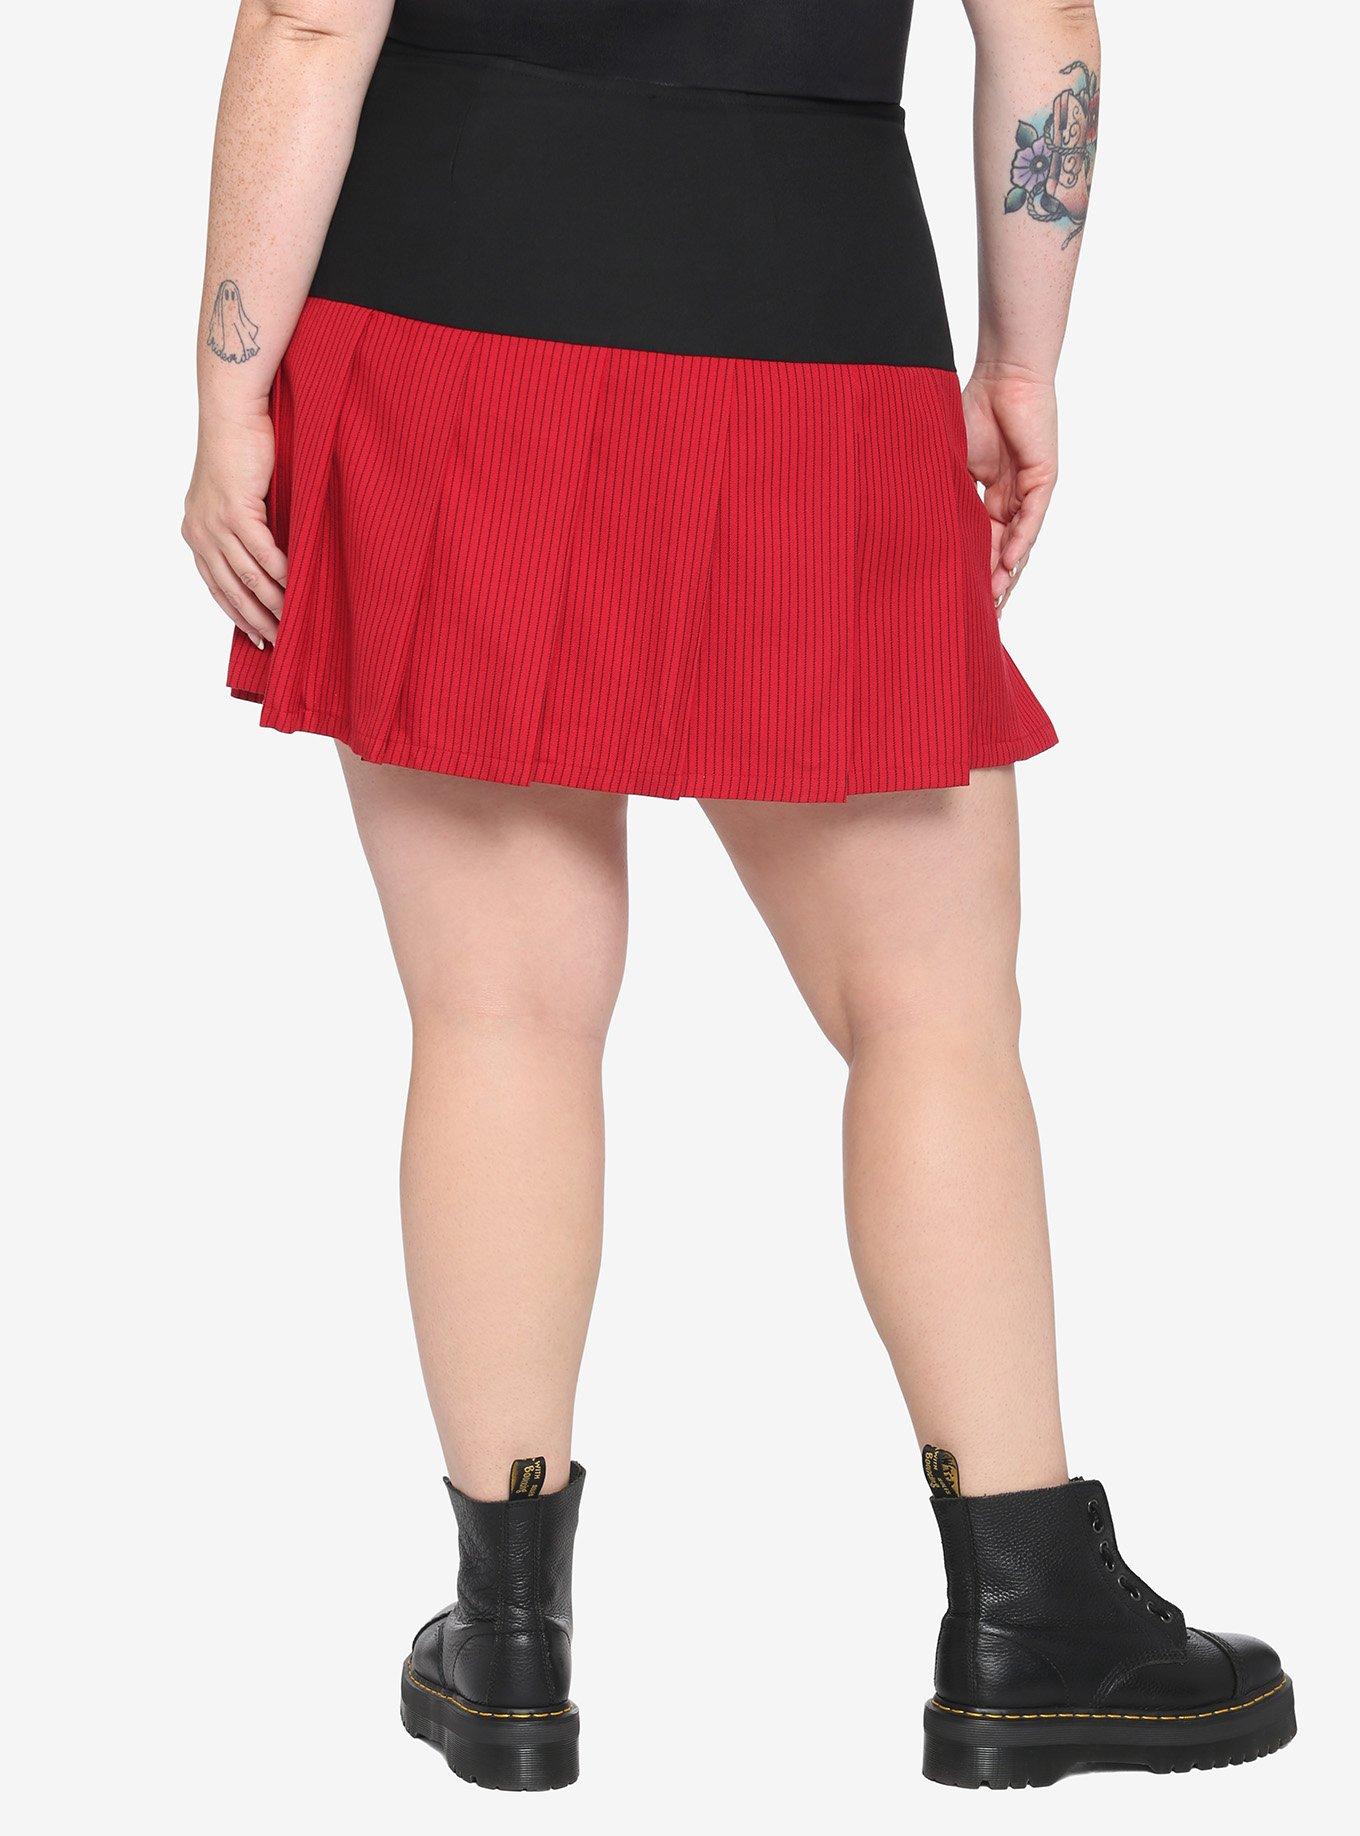 Black & Red Lace-Up Yoke Skirt Plus Size, MULTI, alternate